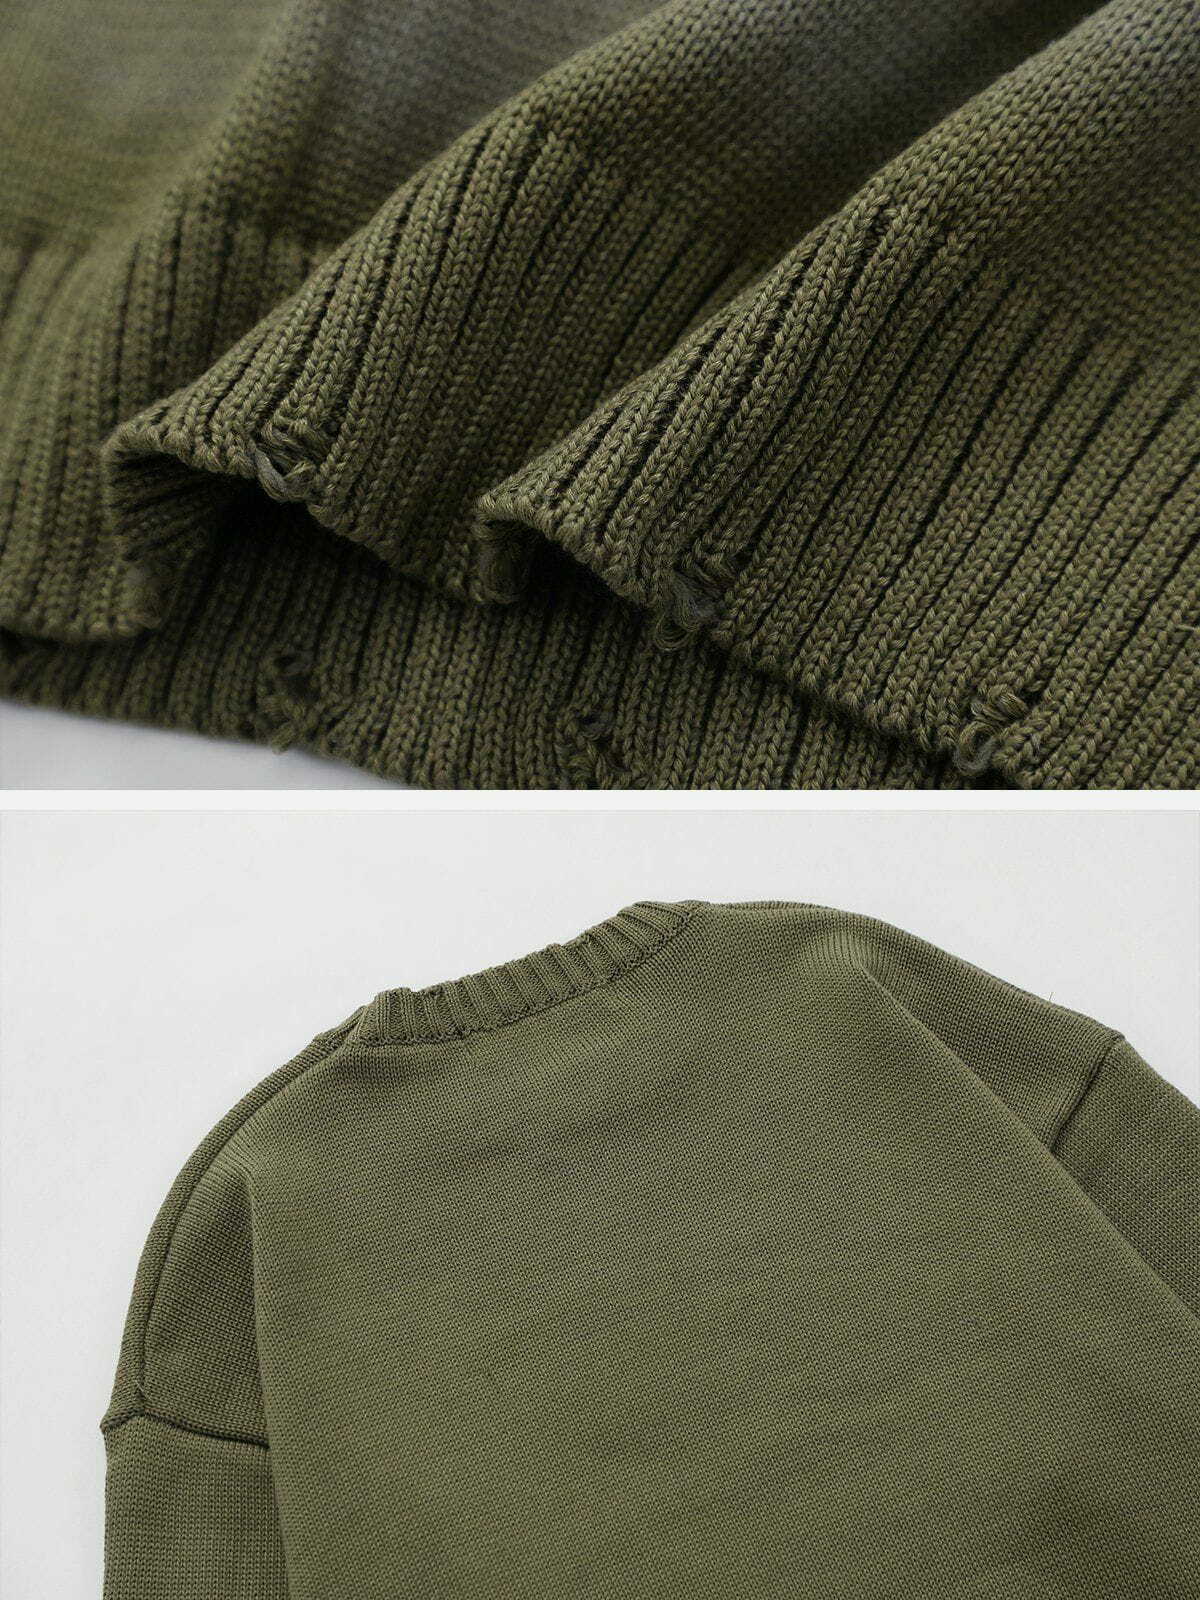 colorblock vintage letter sweater urban streetwear essential 5895